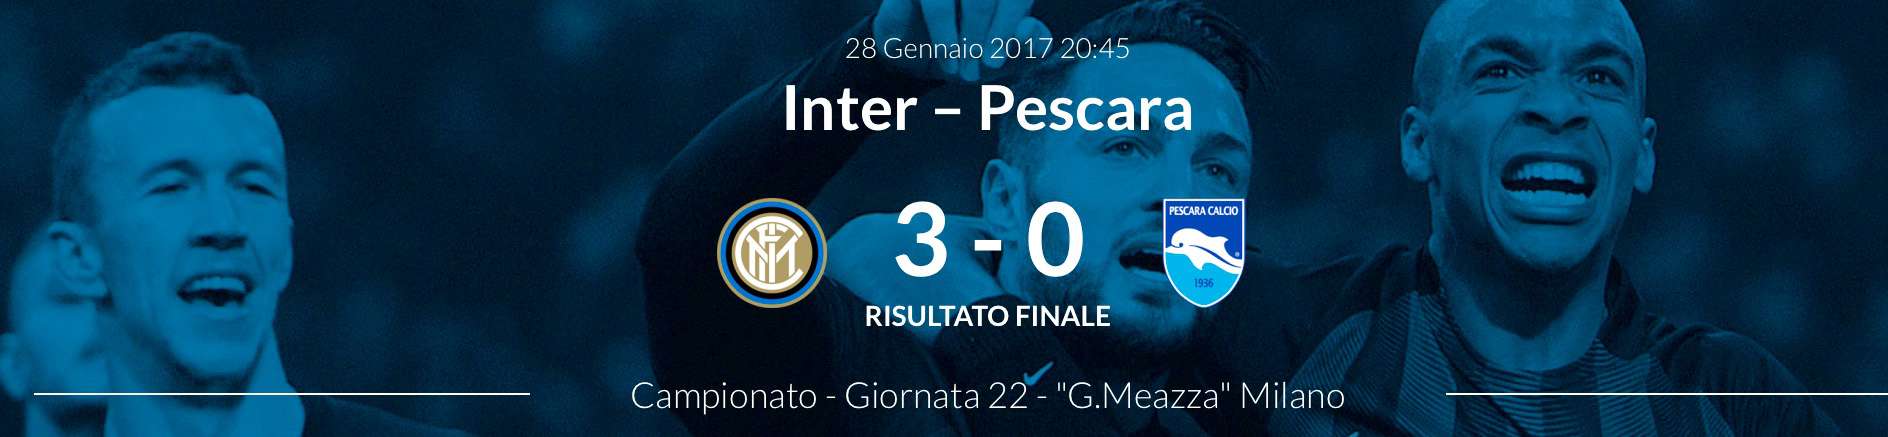 L'Inter